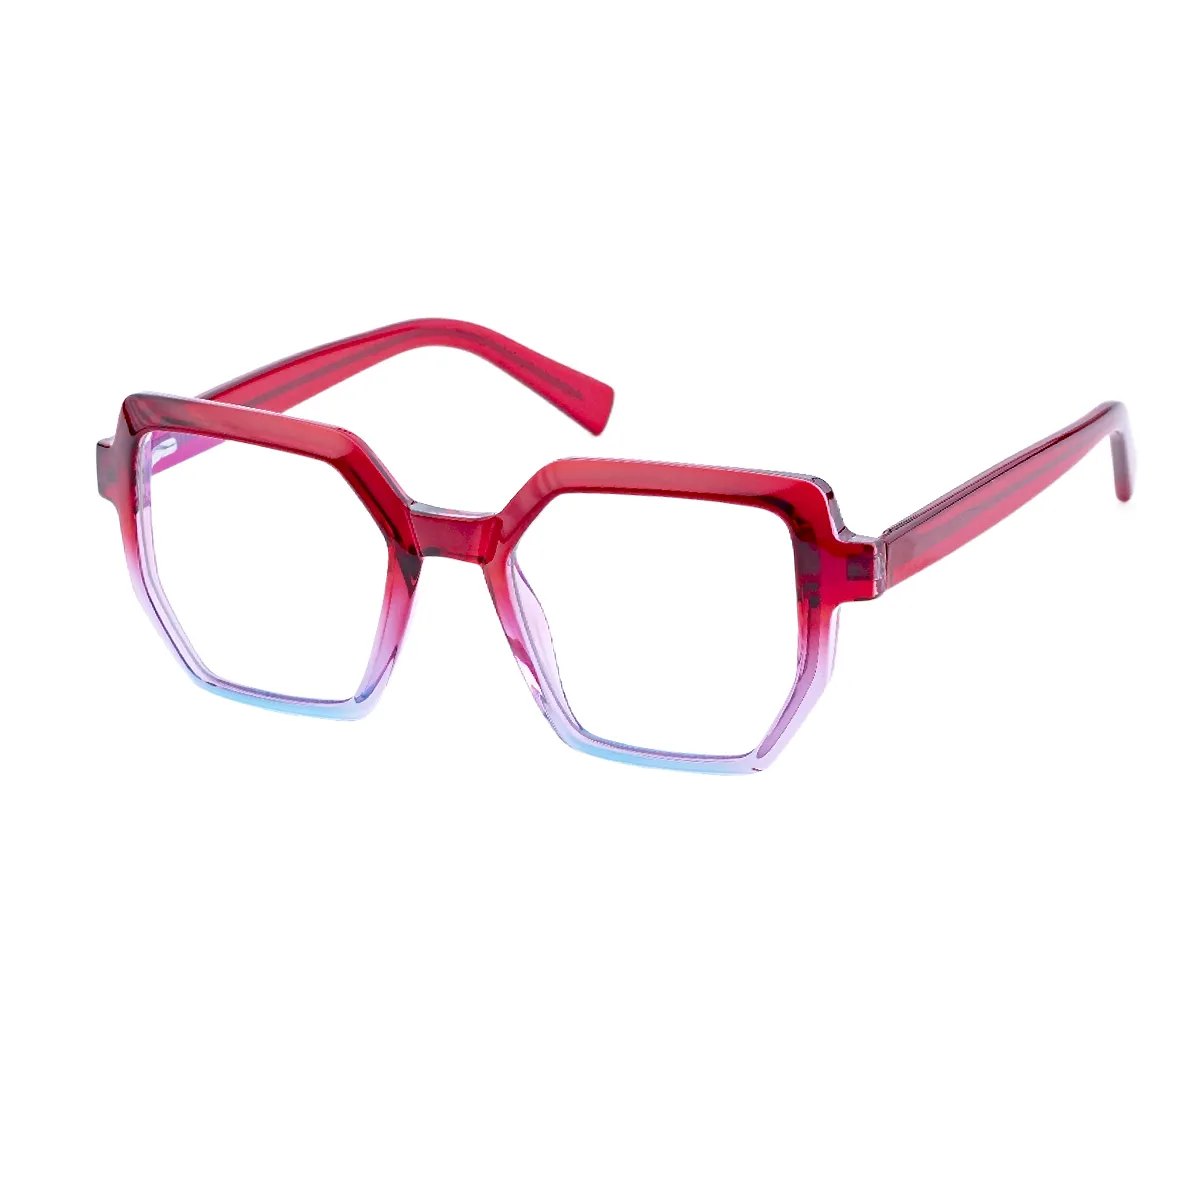 Gemma - Geometric Red Glasses for Women - EFE